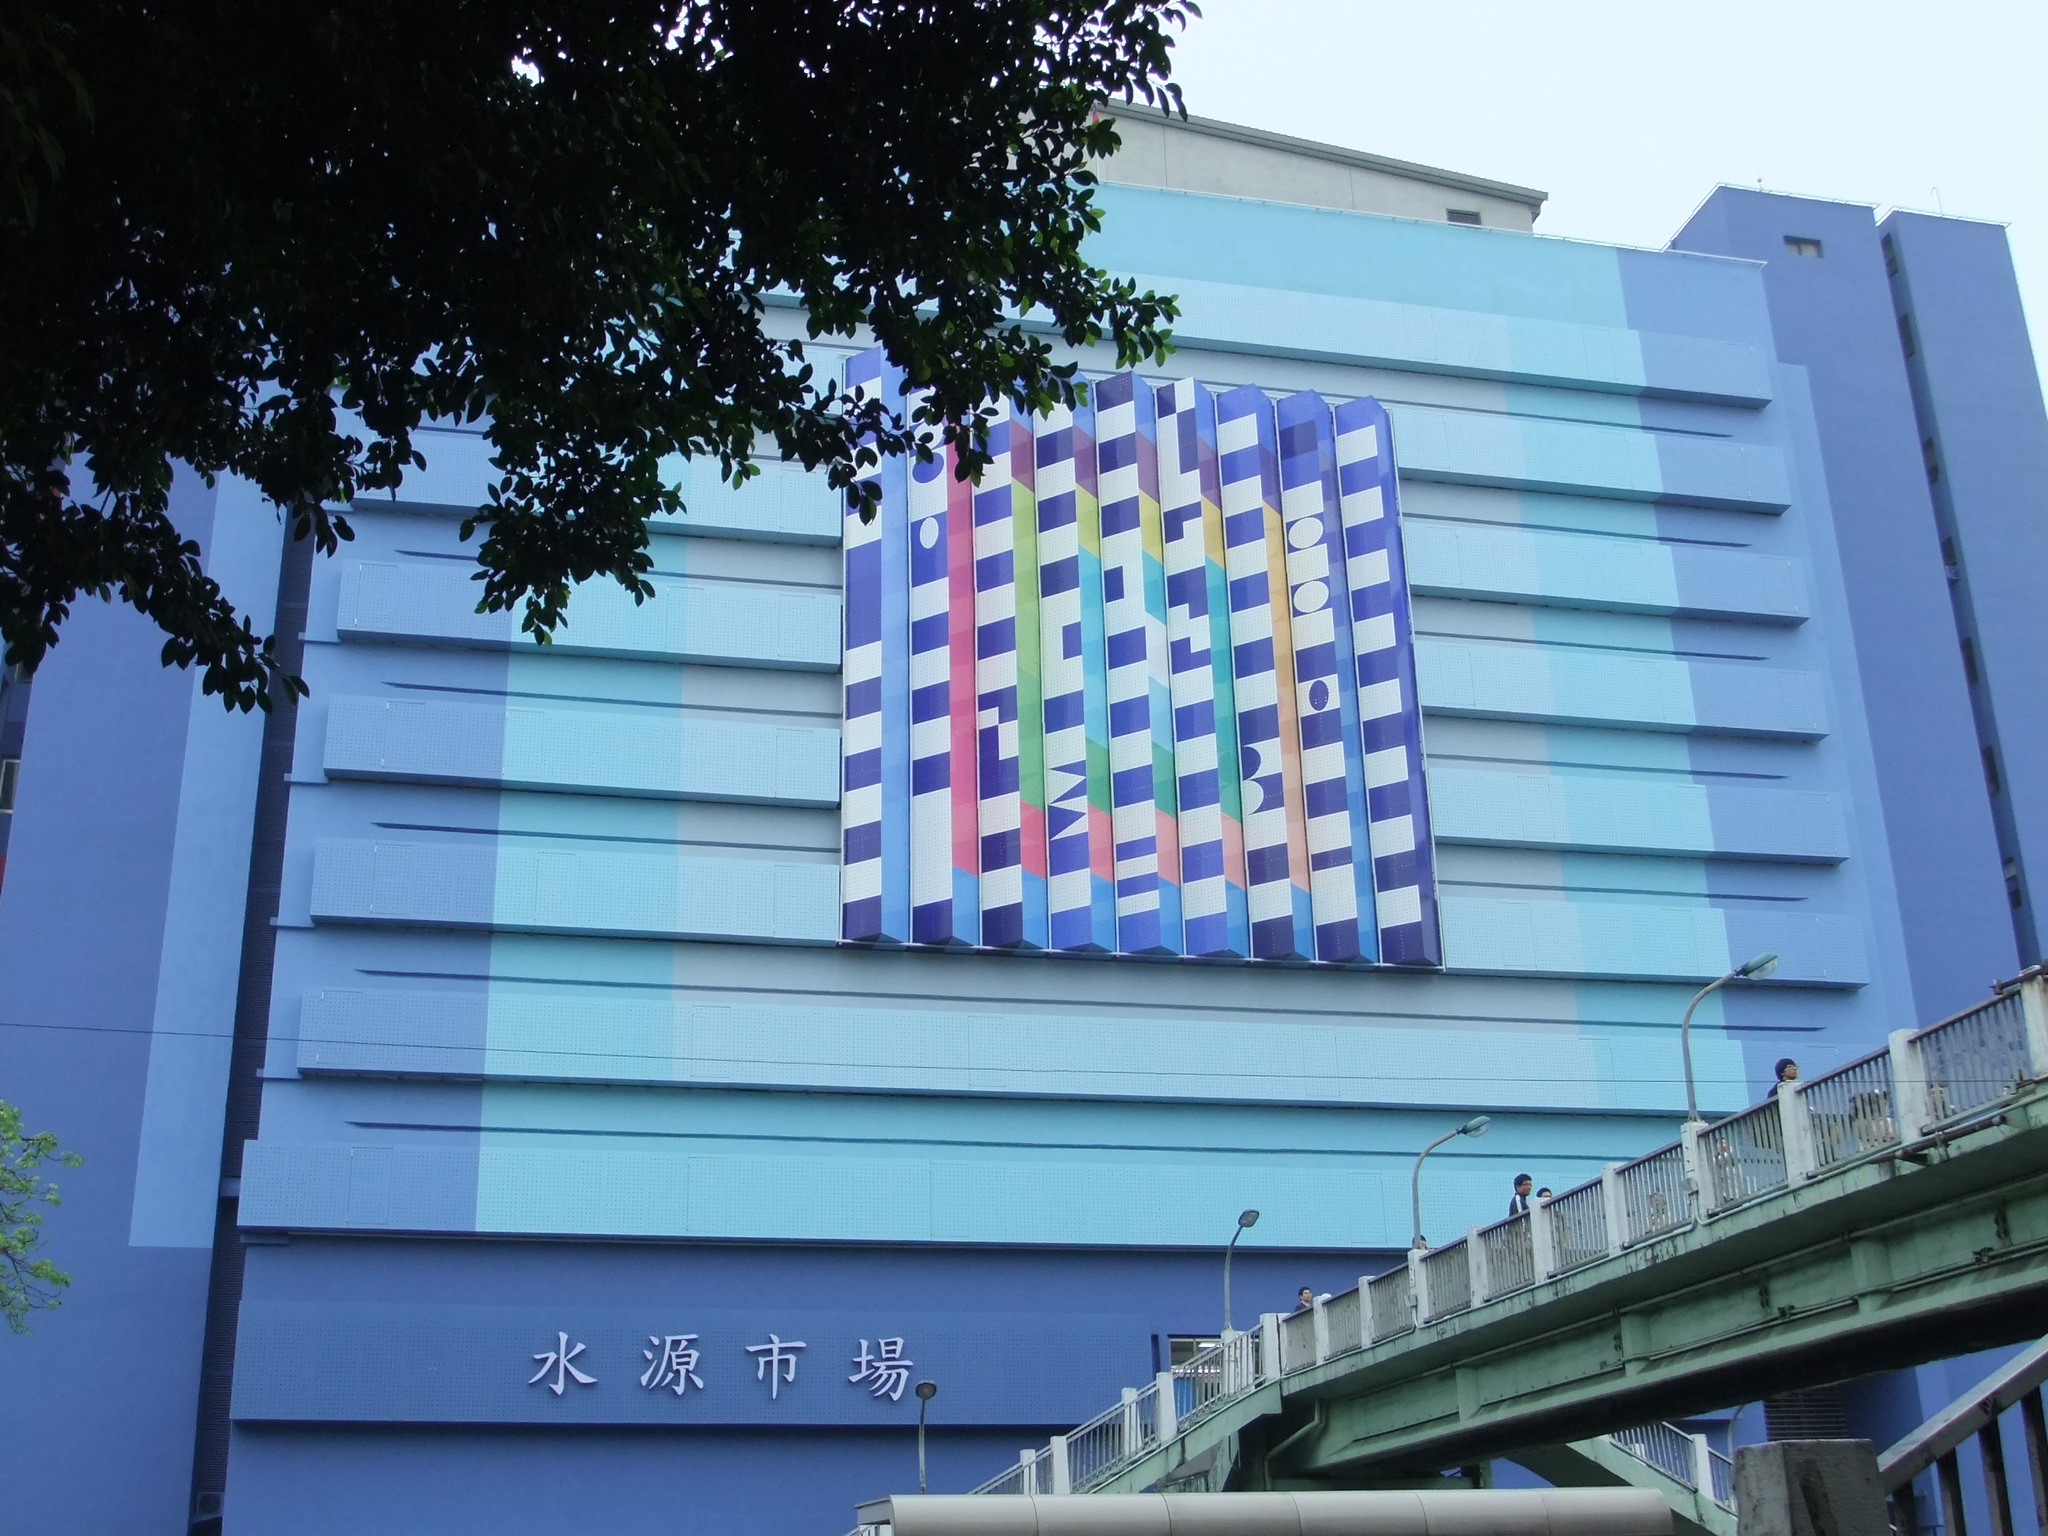 Israli artist Agam transforms Taipei old market into a giant art installation